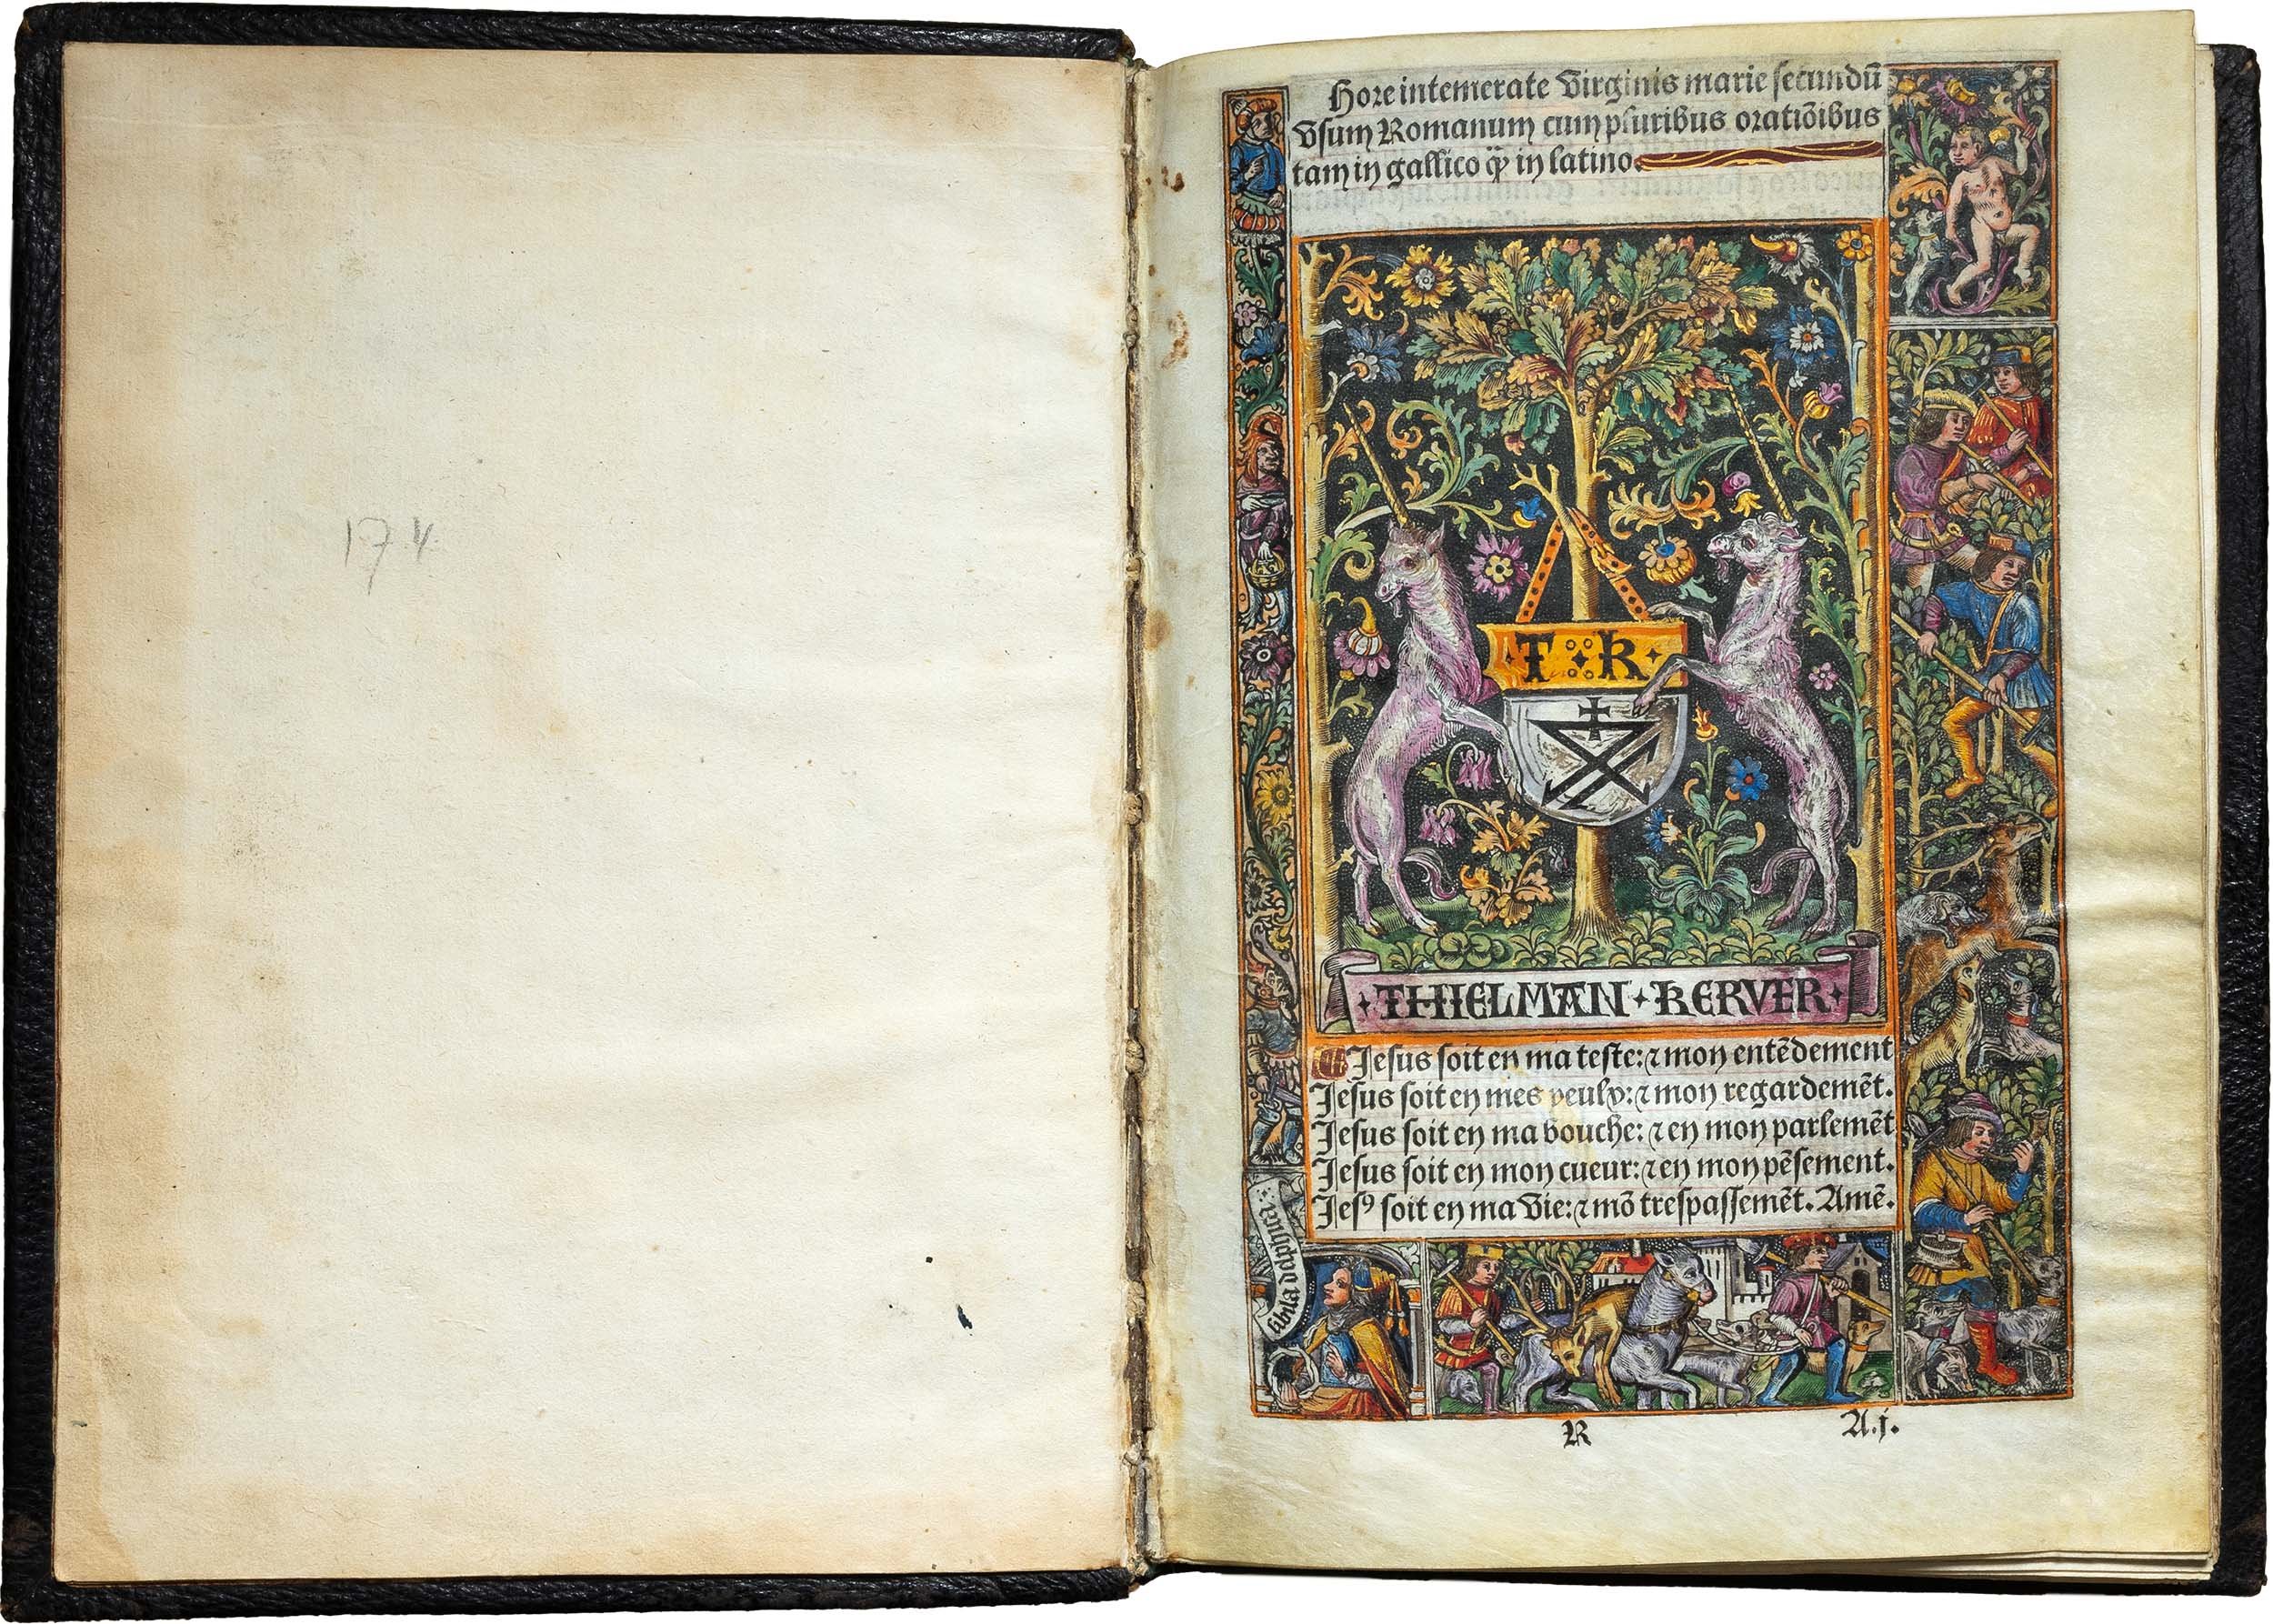 Printed-Book-of-Hours-10-january-1503-horae-bmv-kerver-remacle-illuminated-vellum-copy-schönborn-buchheim-04.jpg